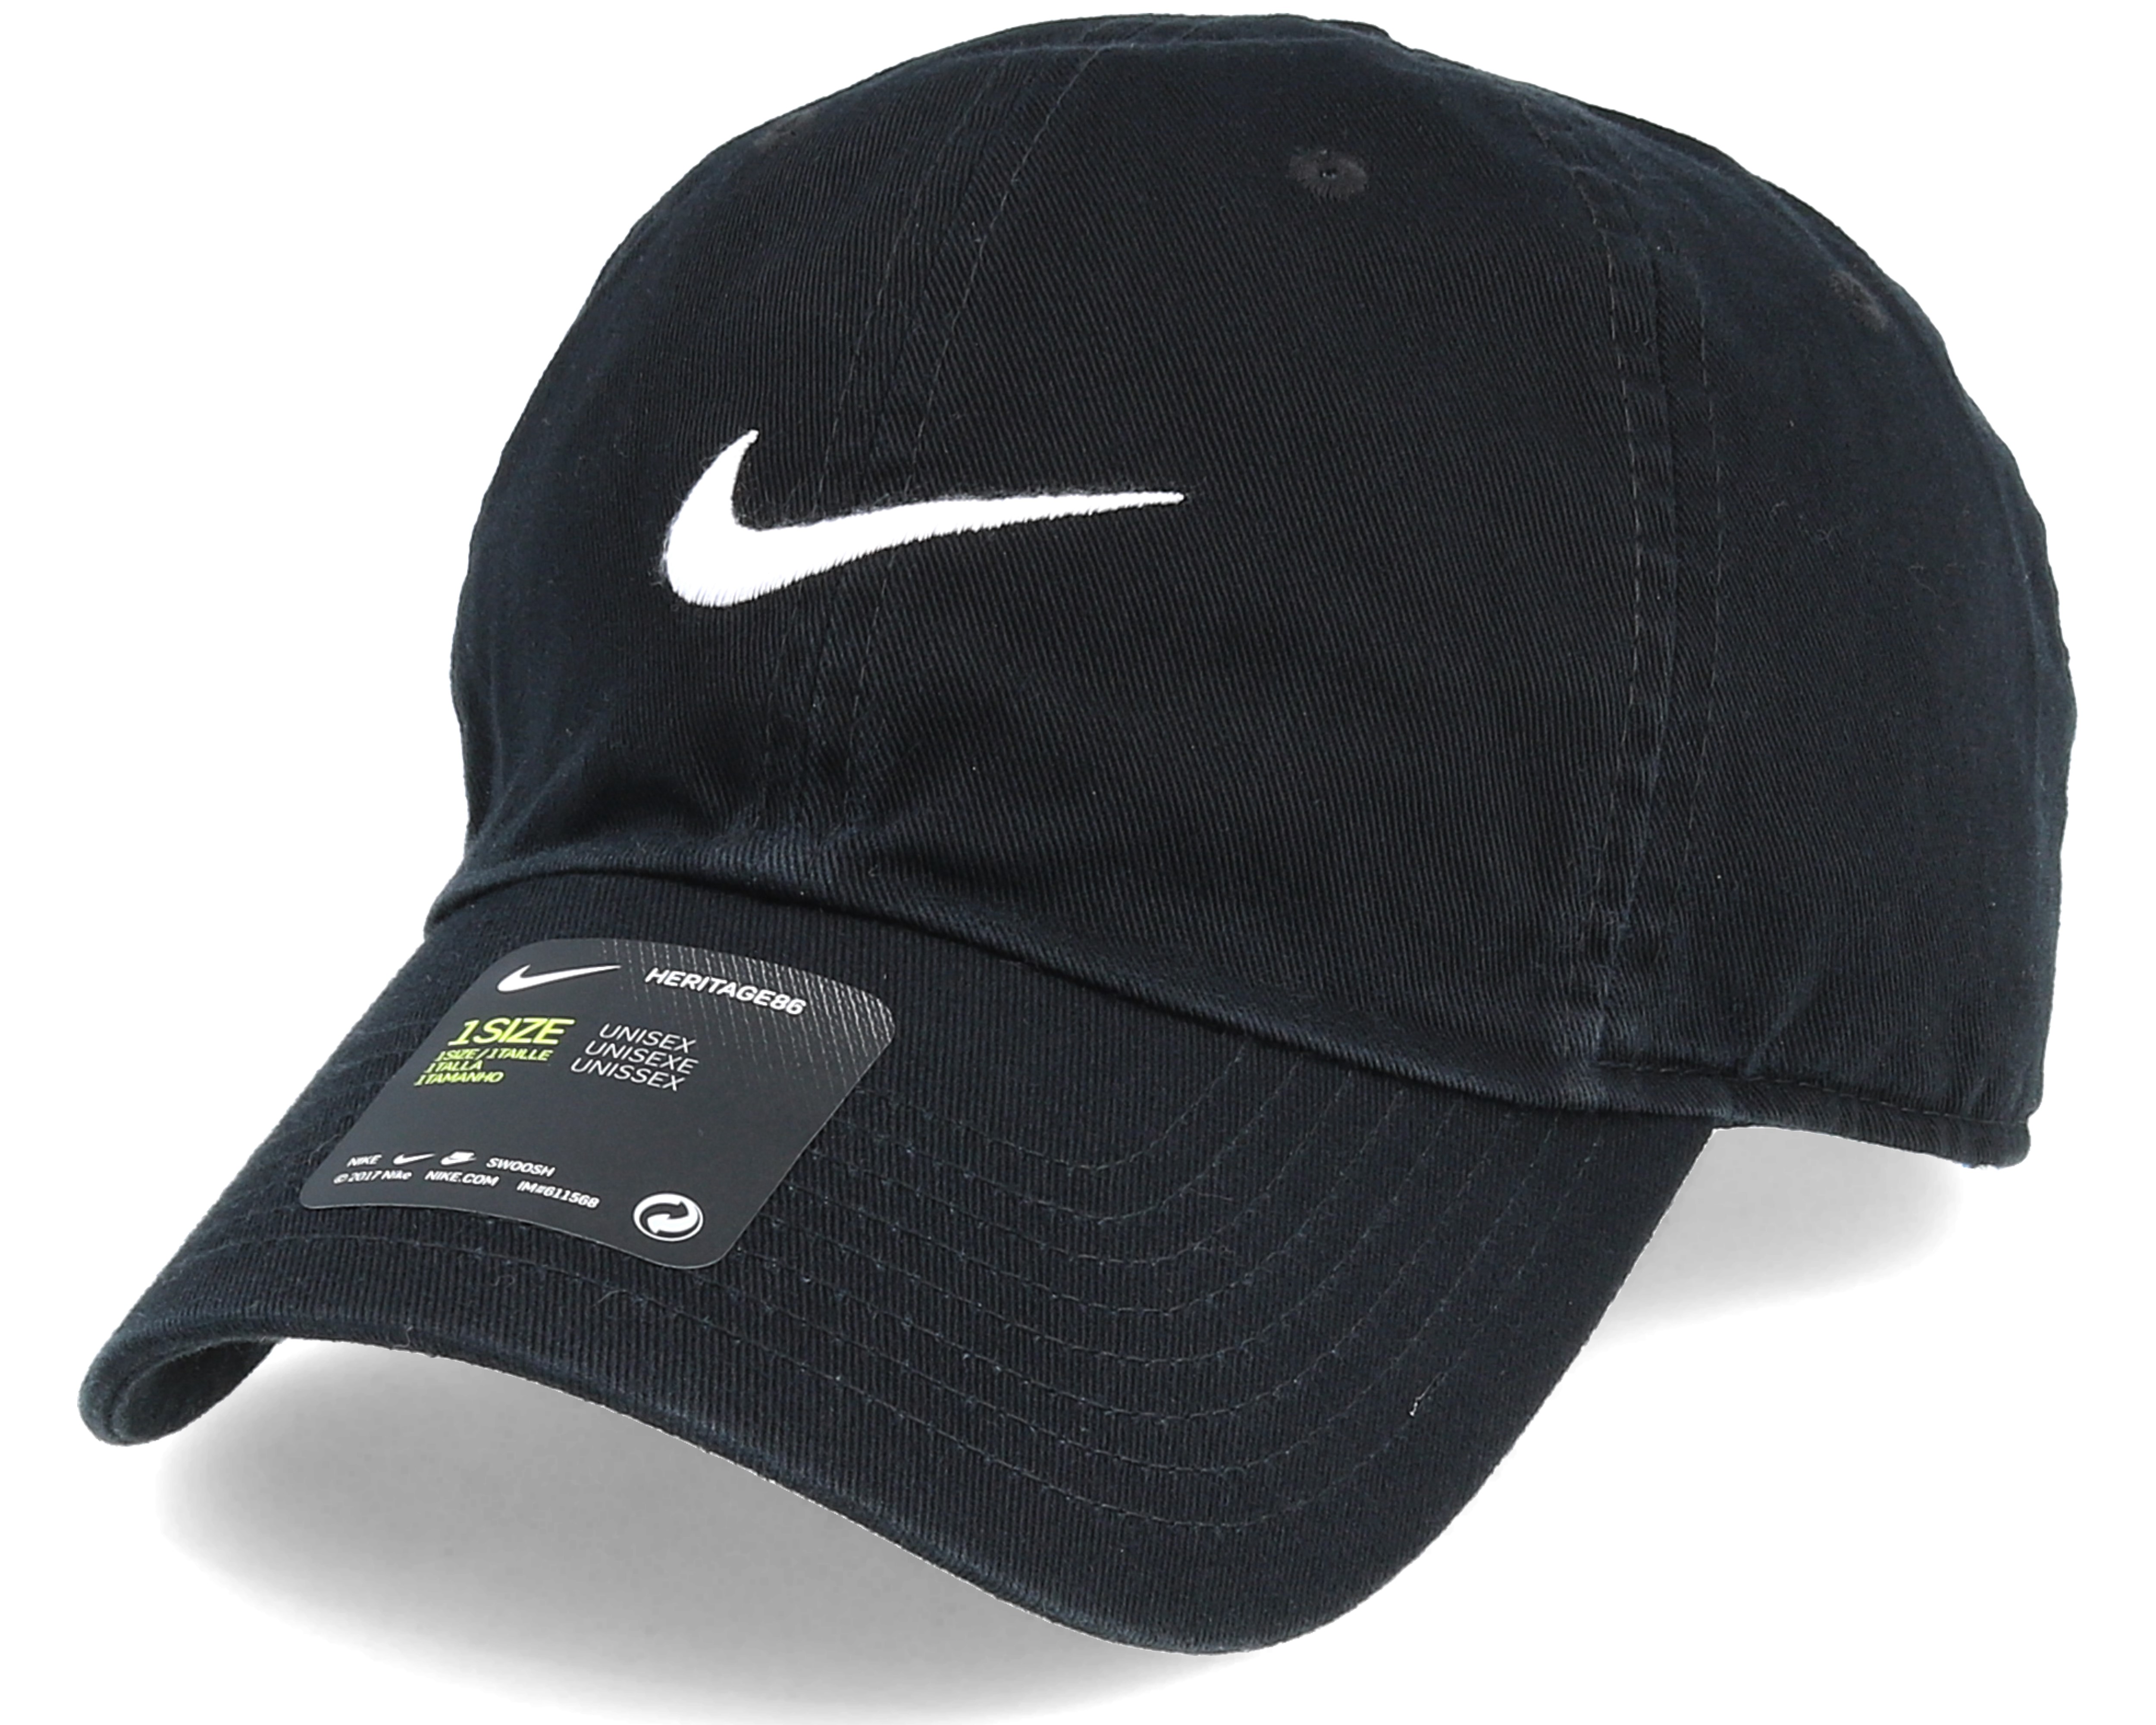 Купить бейсболку найк. Кепка Nike Swoosh черная. Бейсболка Nike 520787-010 Mesh Daybreak ADJ cap. Кепка Nike FSU hats. Мужская бейсболка Nike.